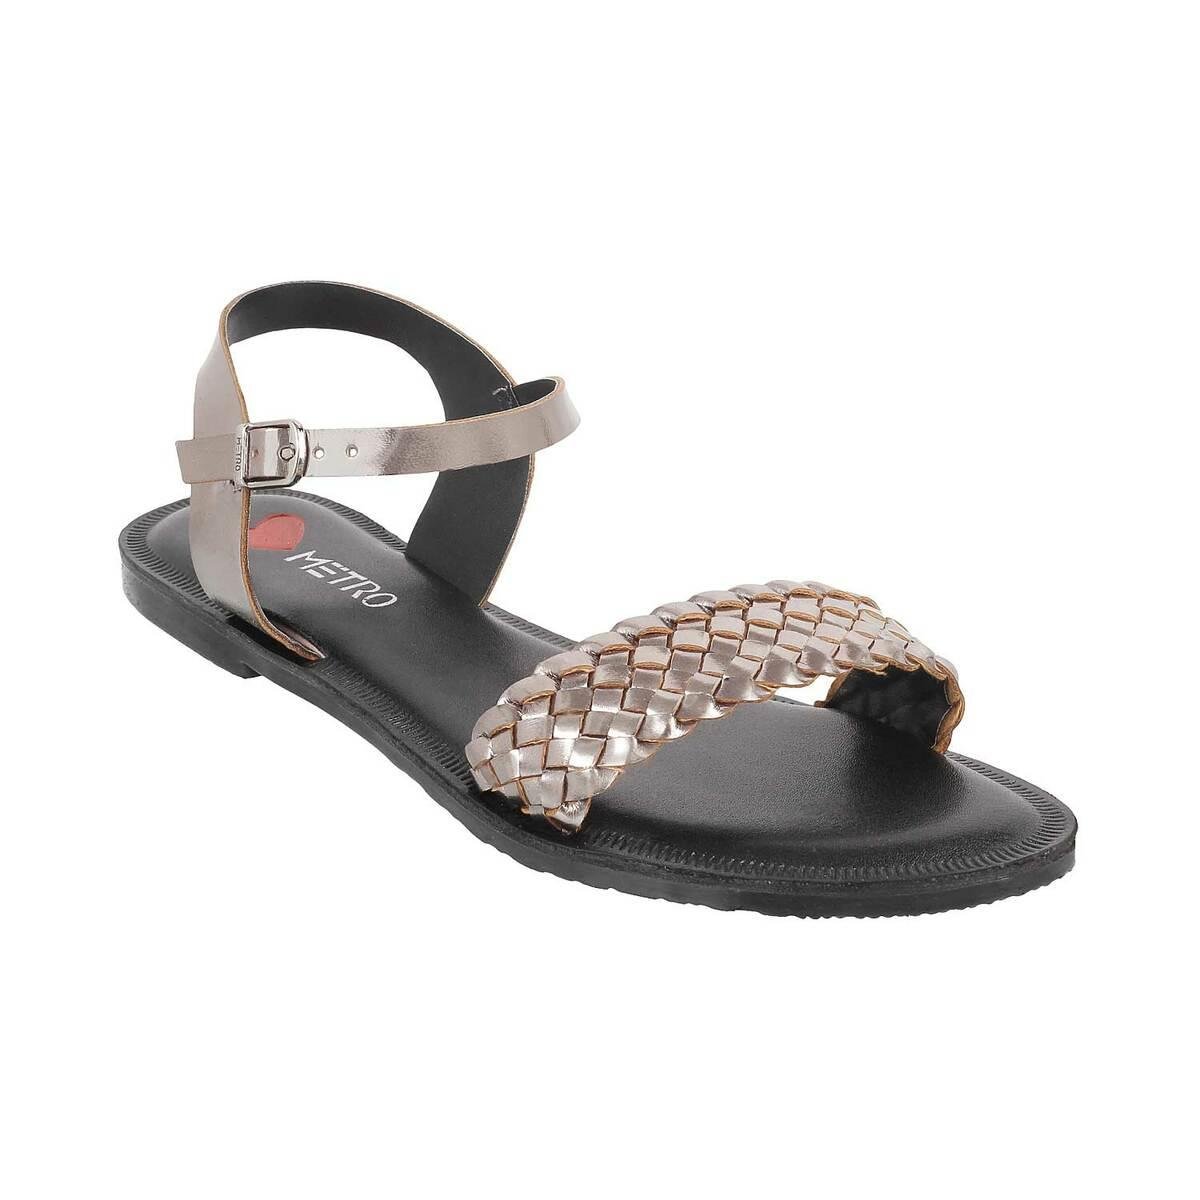 Buy Women White Casual Sandals Online | SKU: 33-295-16-36-Metro Shoes